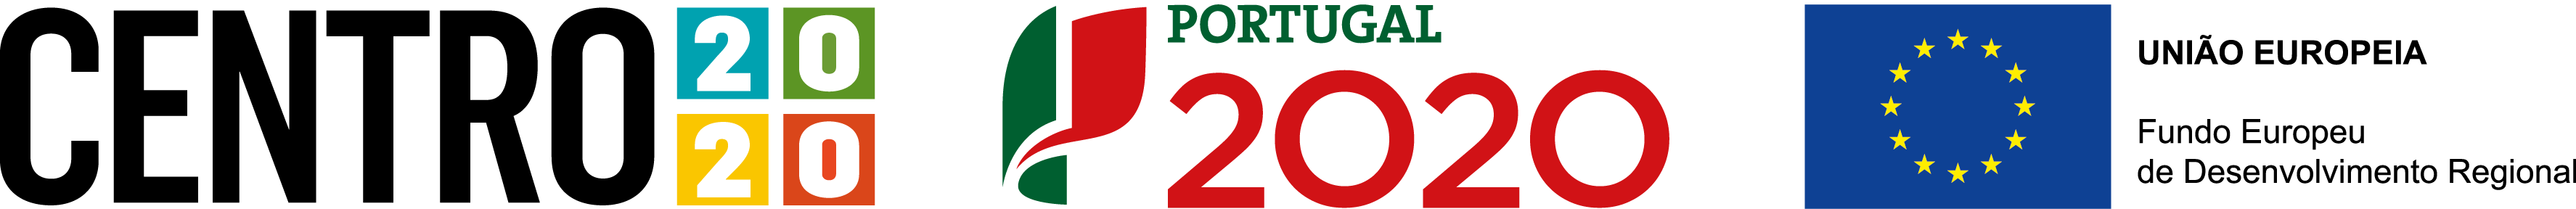 PORTUGAL2020